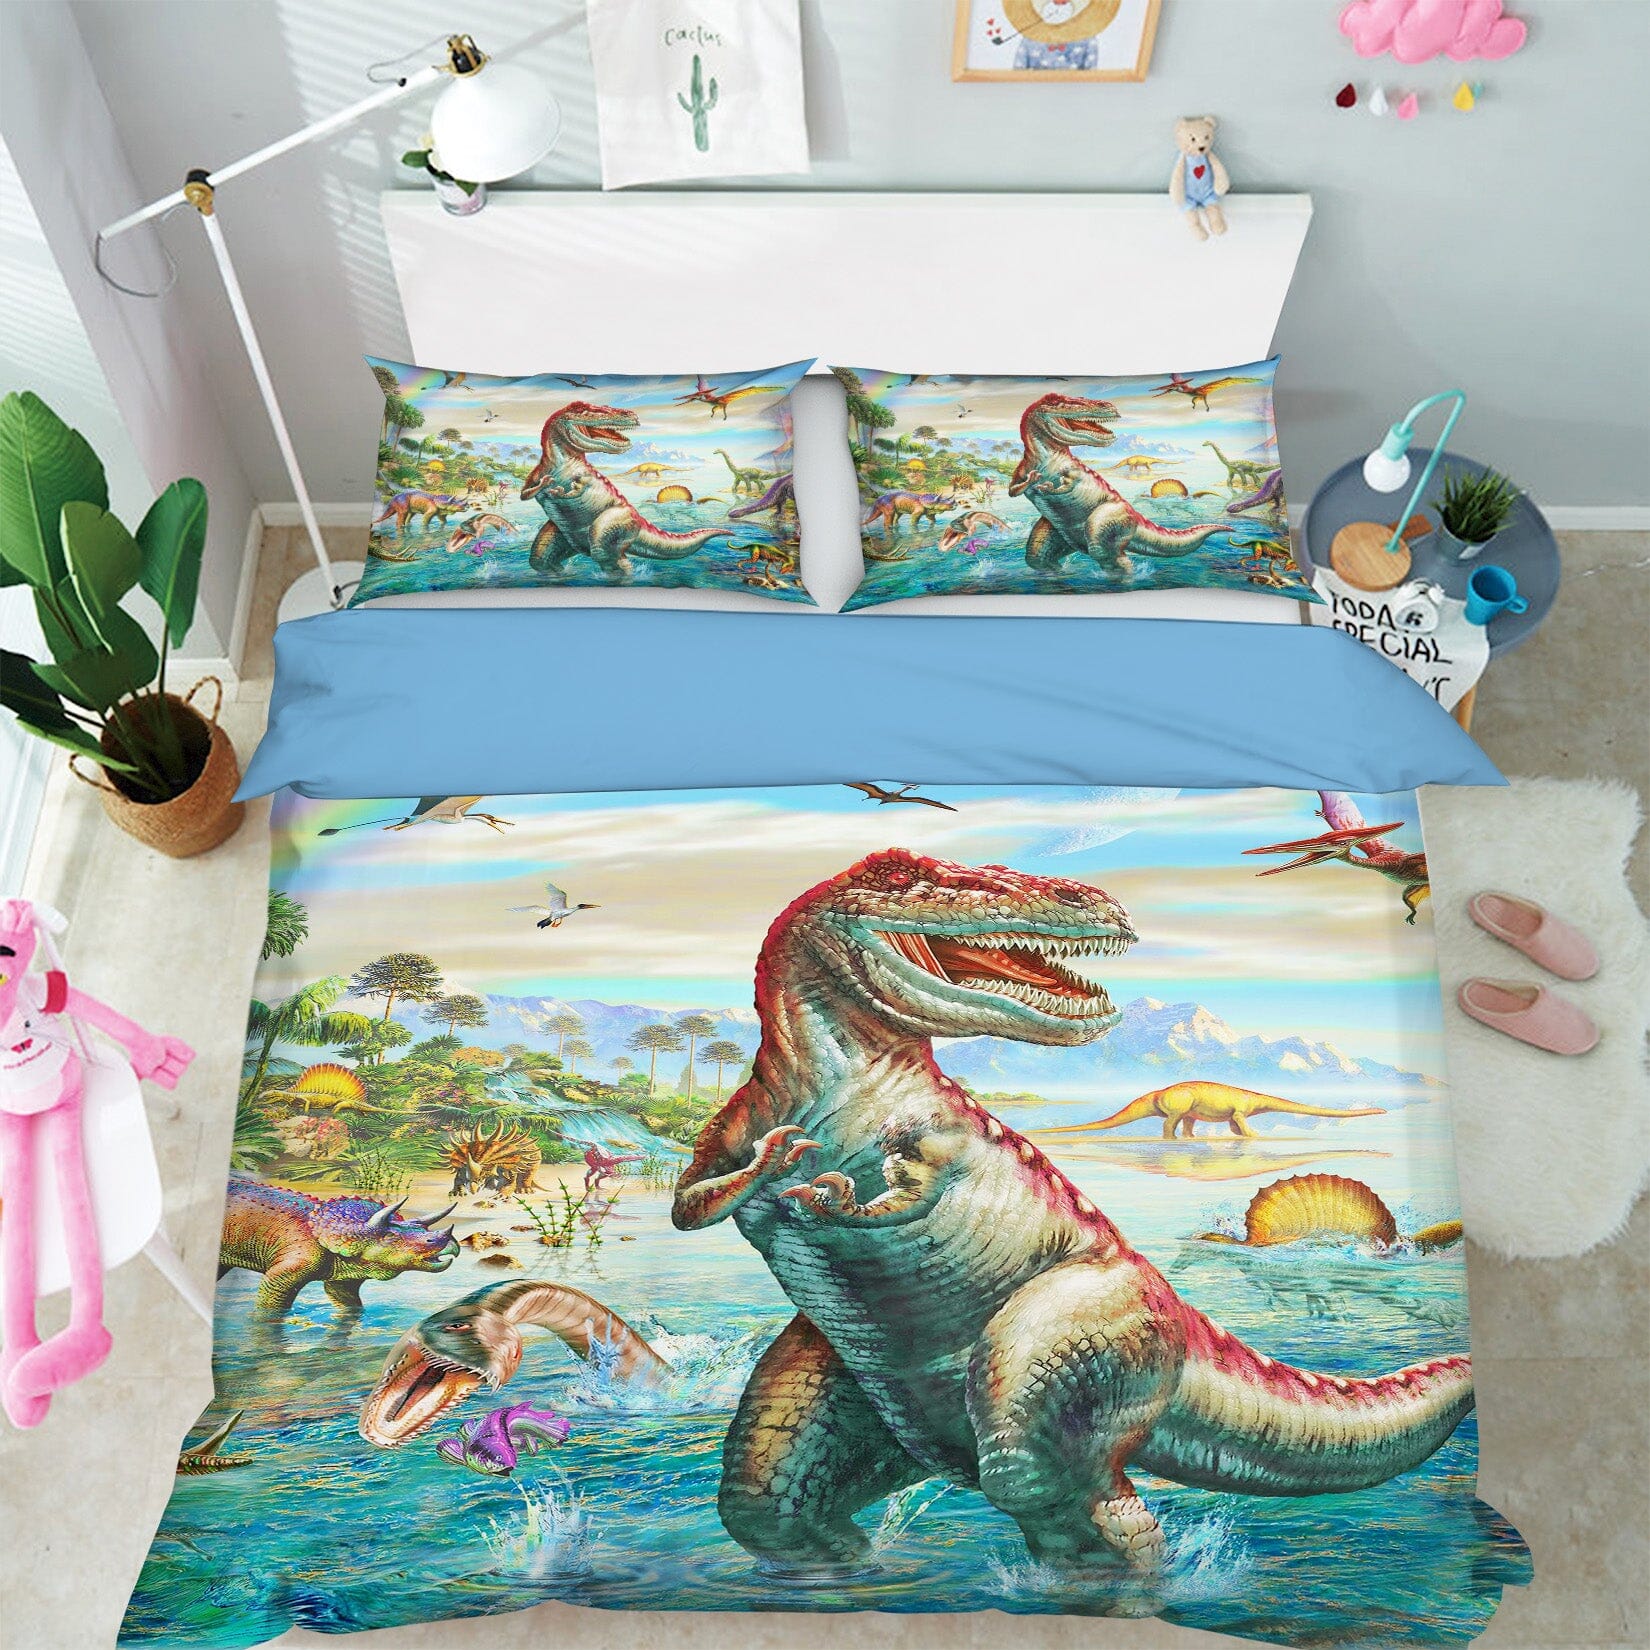 3D Dinosaur Falls 2122 Adrian Chesterman Bedding Bed Pillowcases Quilt Quiet Covers AJ Creativity Home 